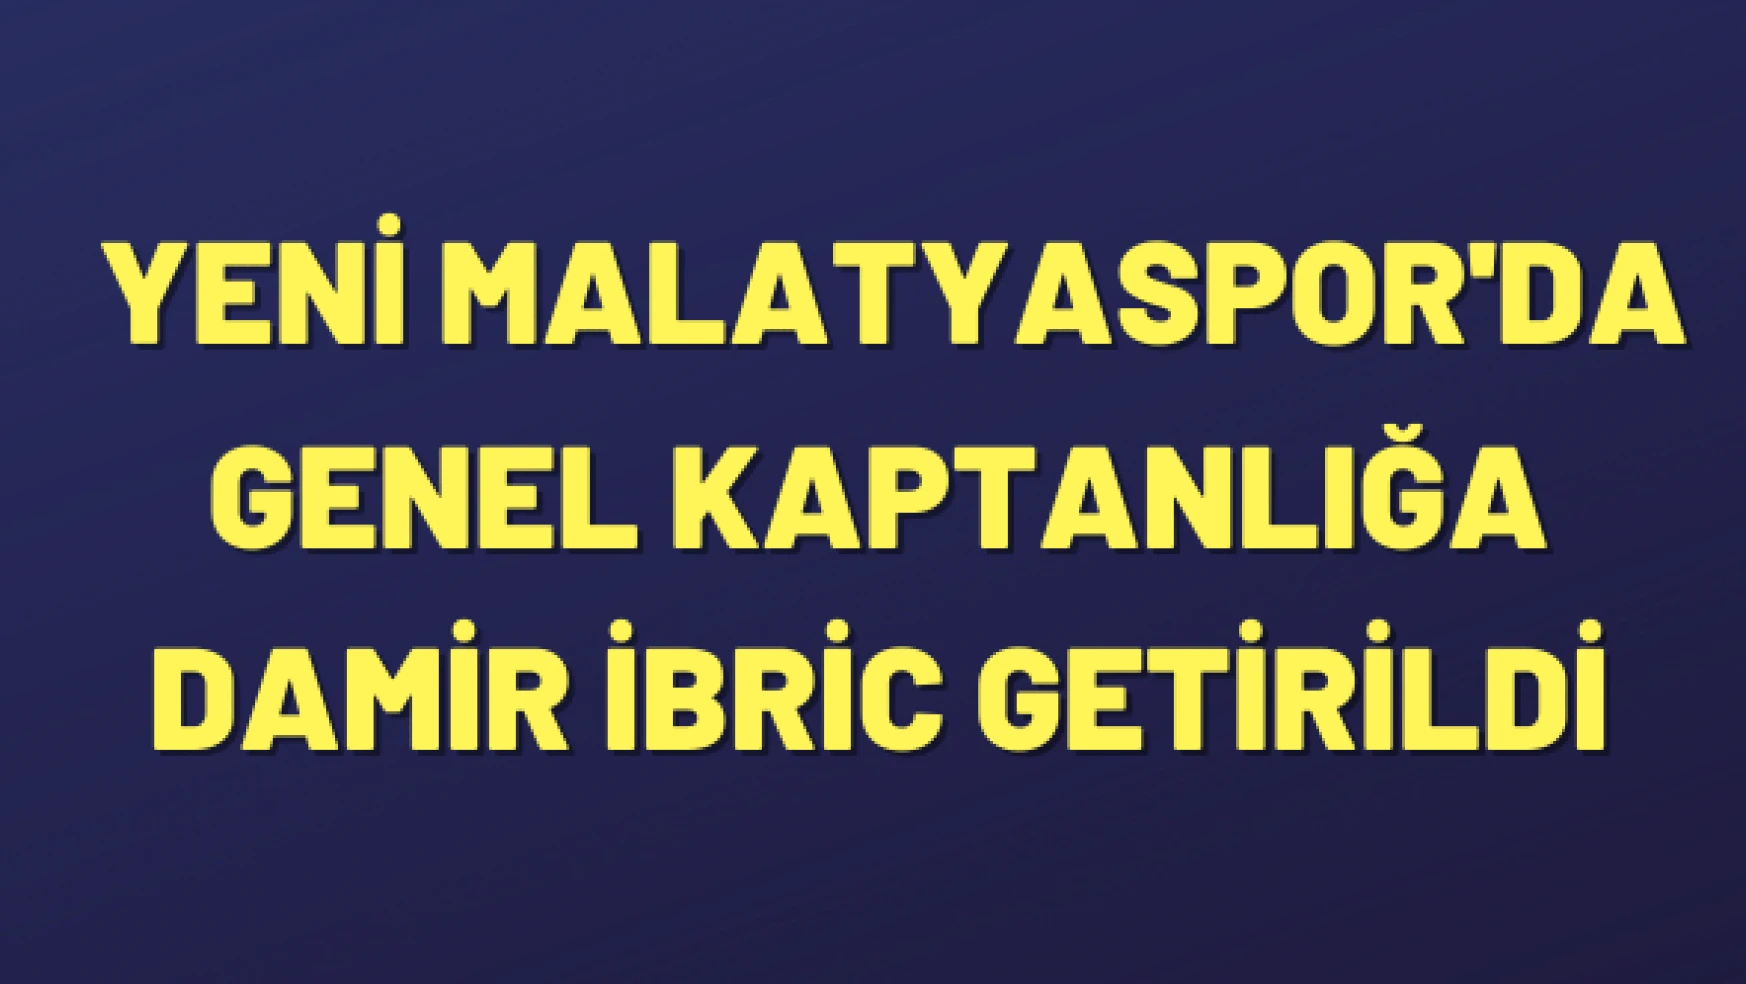 Yeni Malatyaspor'da genel kaptanlığa Damir İbric getirildi